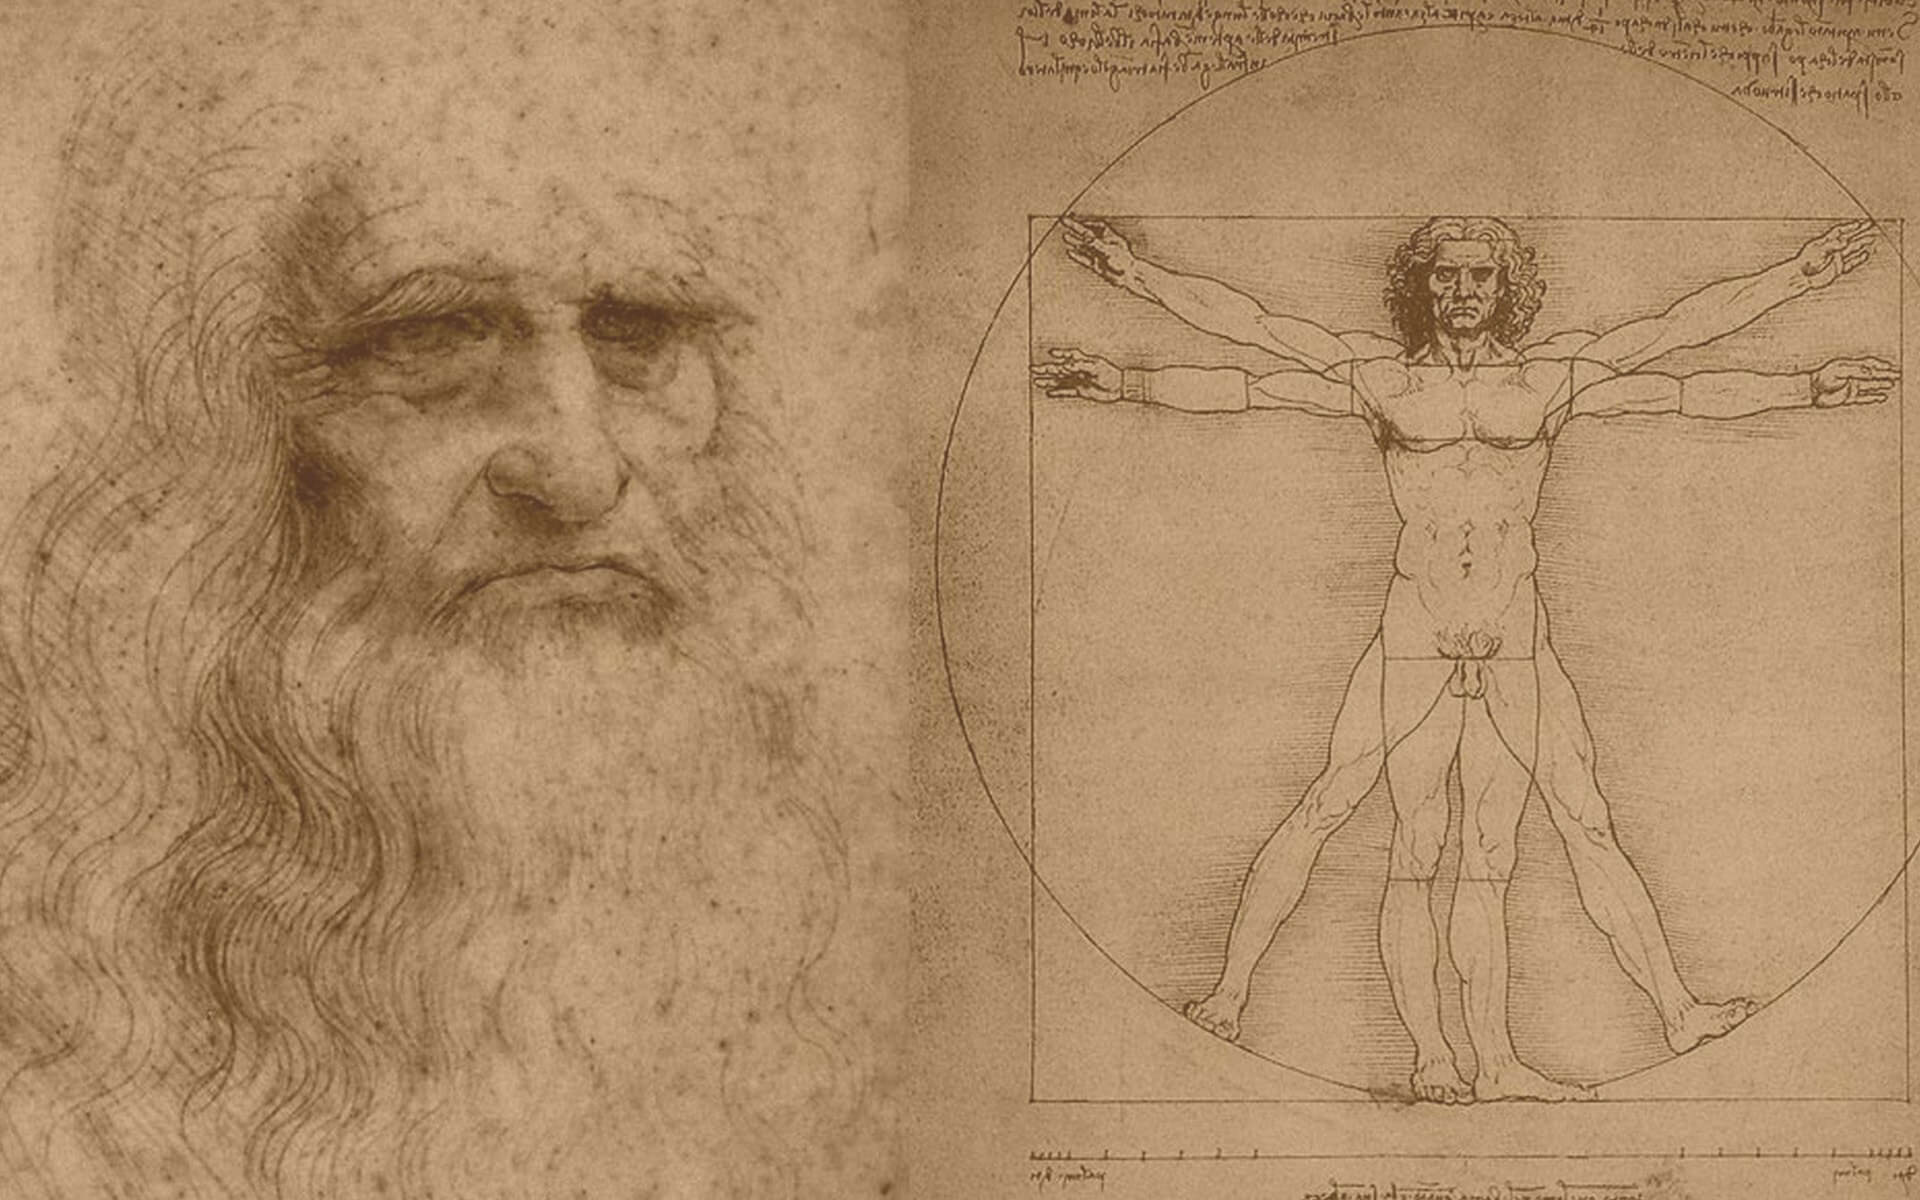 Leonardo da Vinci Experience Entry ticket